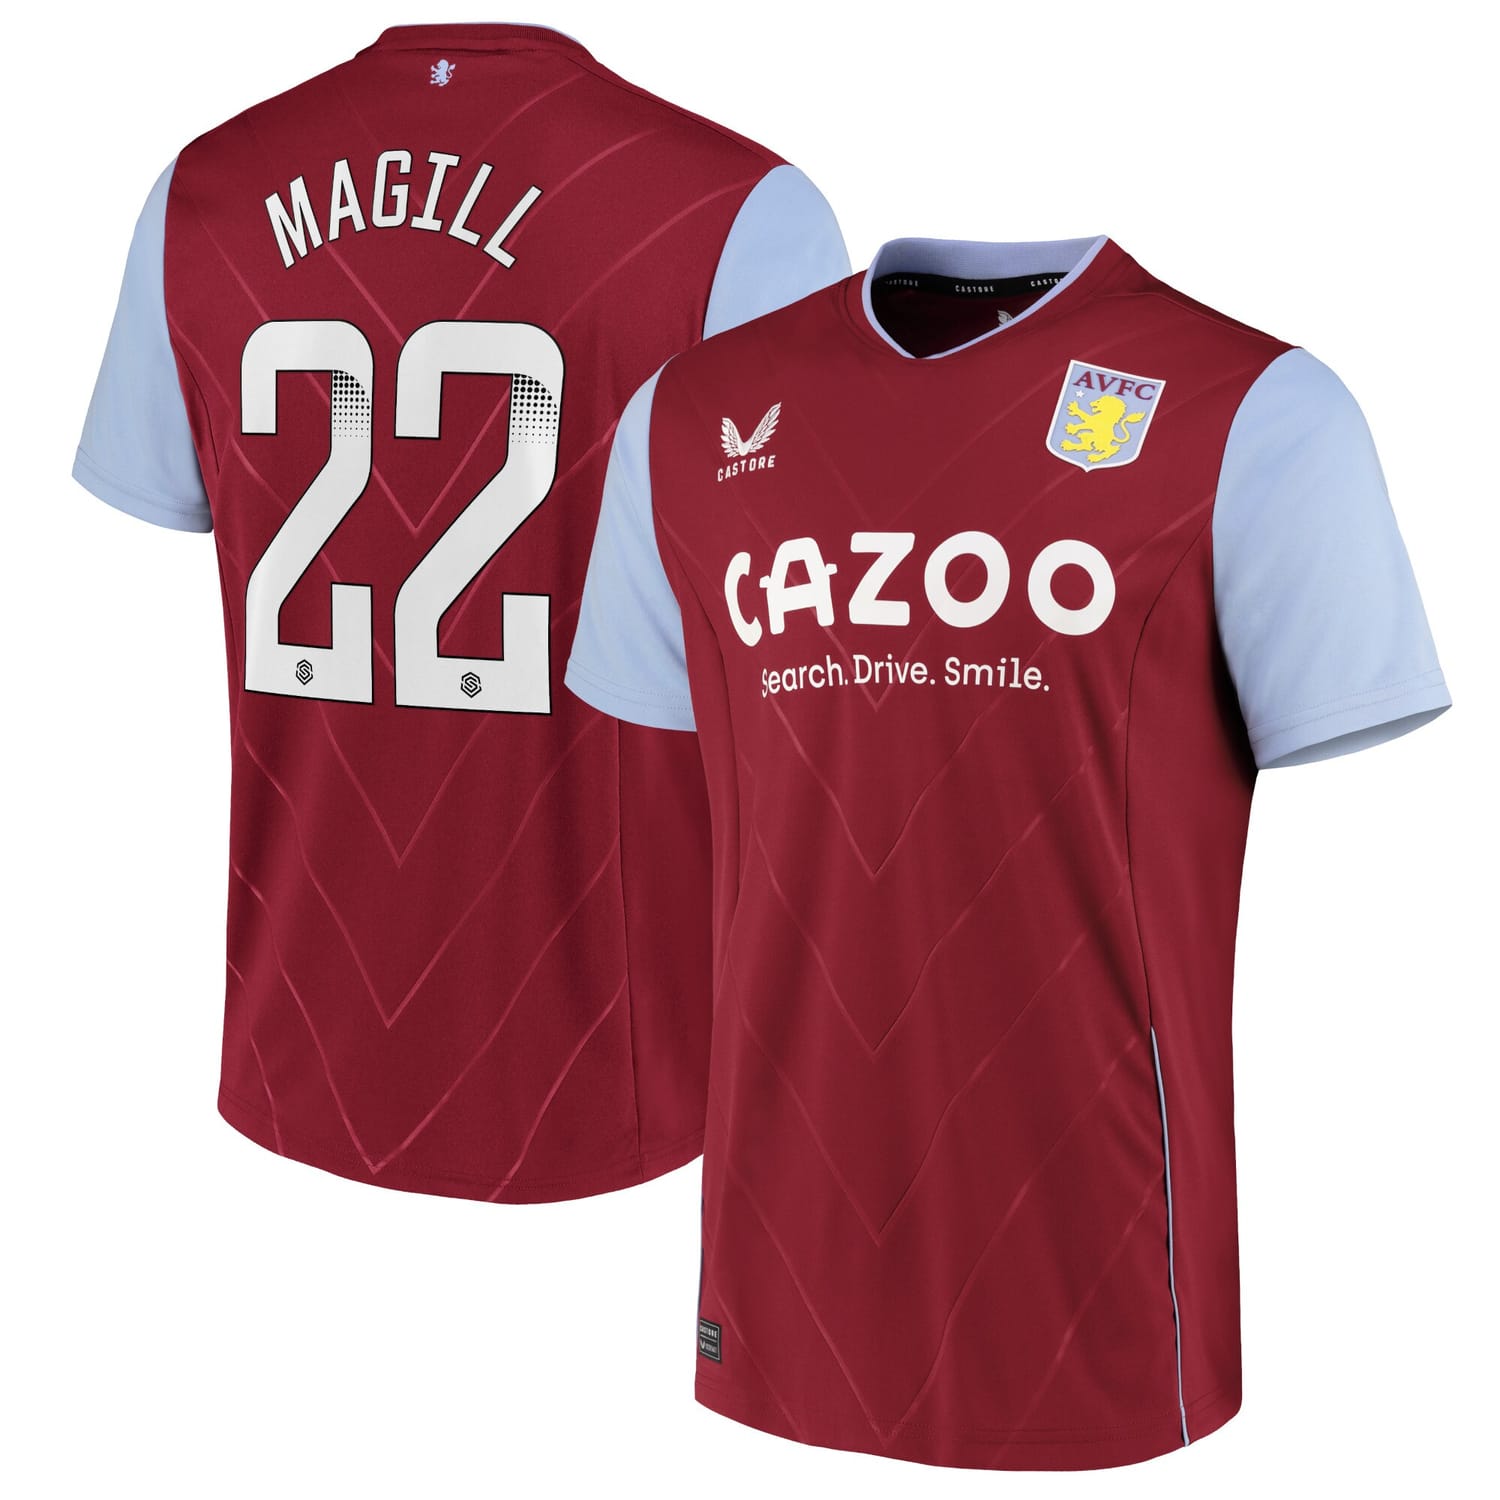 Premier League Aston Villa Home WSL Jersey Shirt 2022-23 player Simone Magill 22 printing for Men